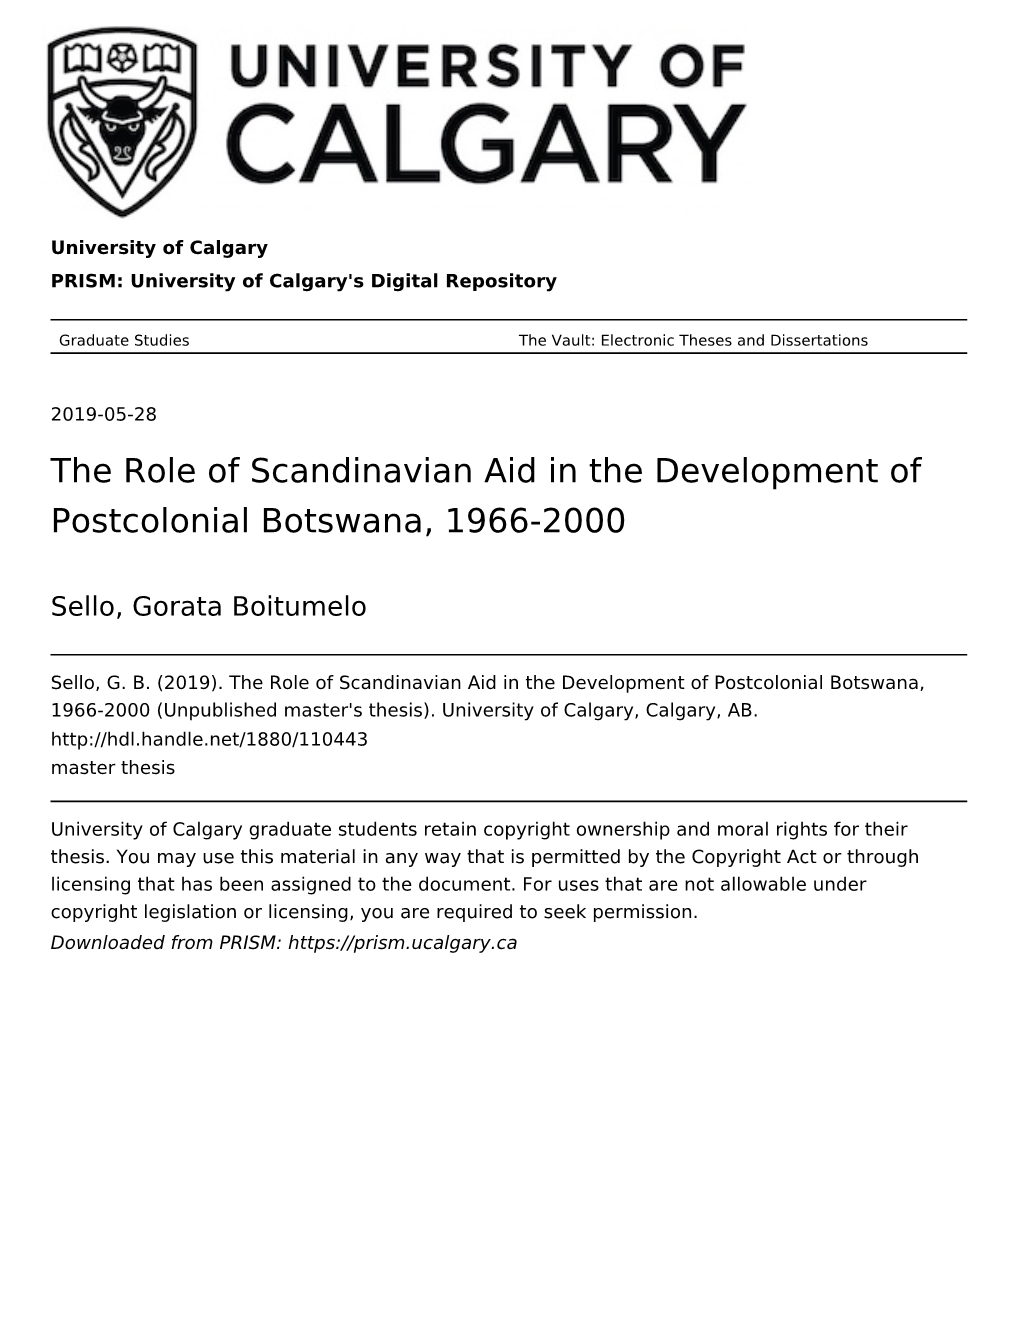 The Role of Scandinavian Aid in the Development of Postcolonial Botswana, 1966-2000